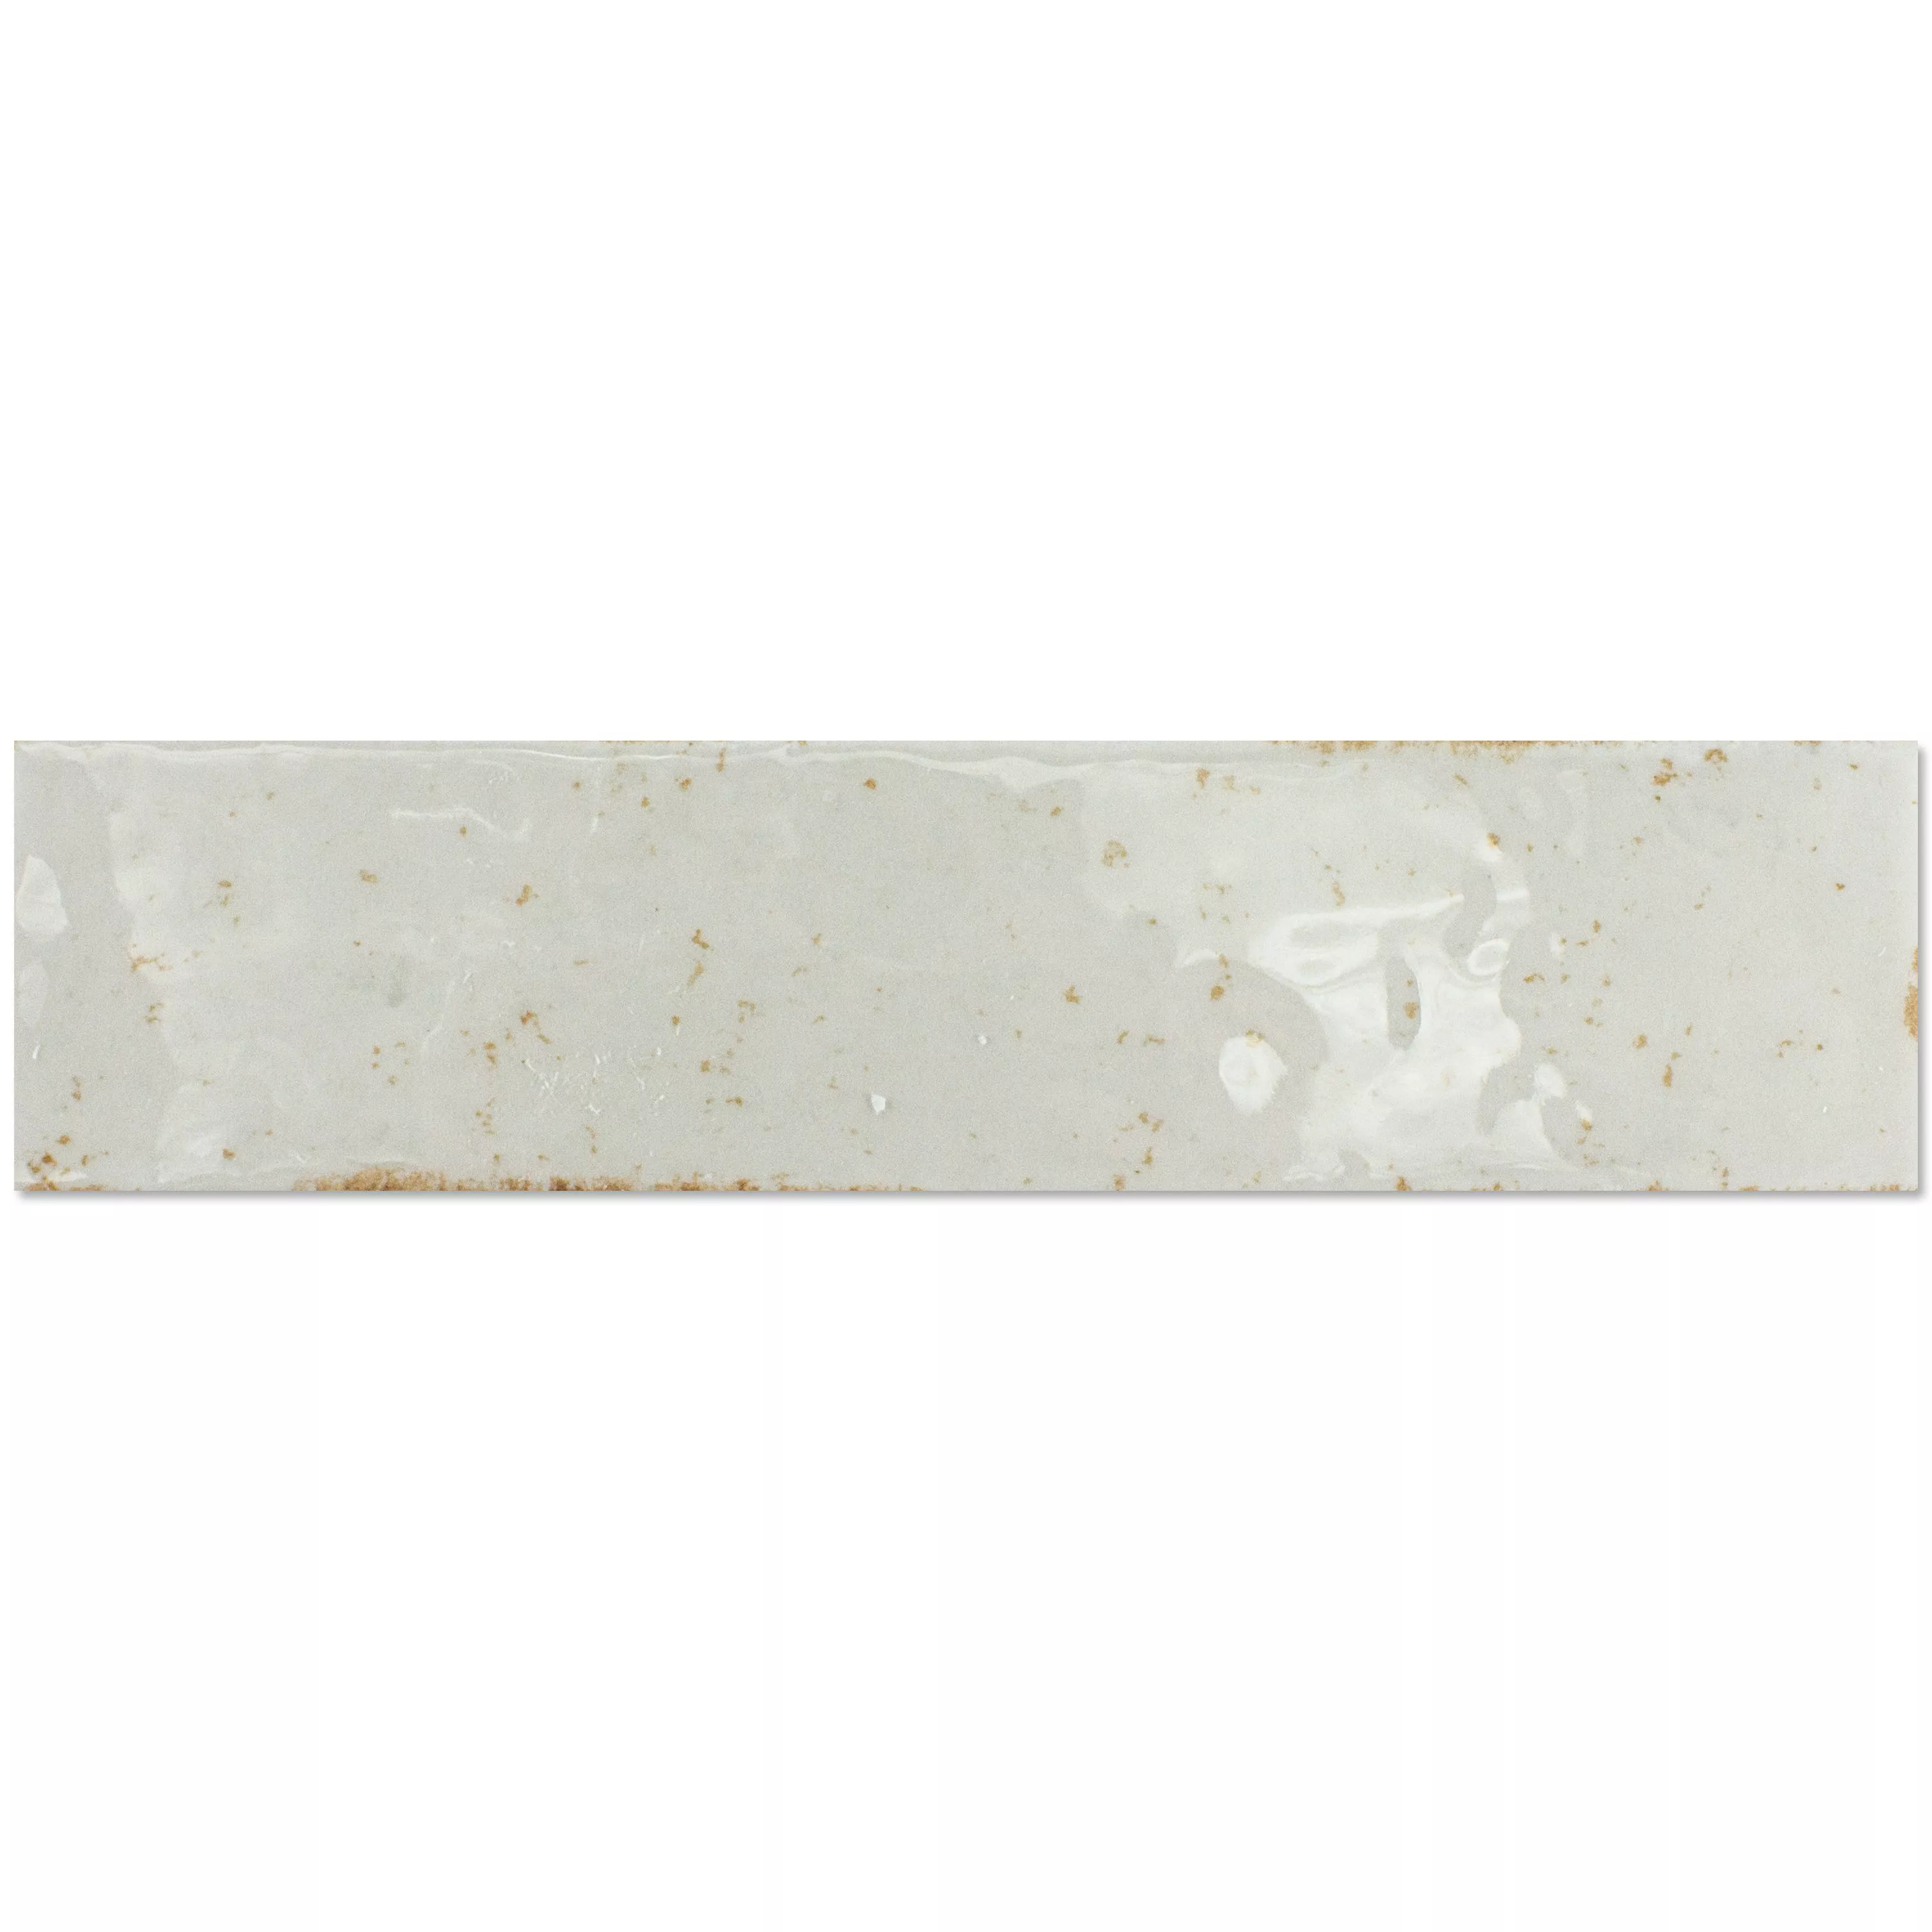 Échantillon Carrelage Mural Kiowa Brillant Ondulé 6x25cm Blanc